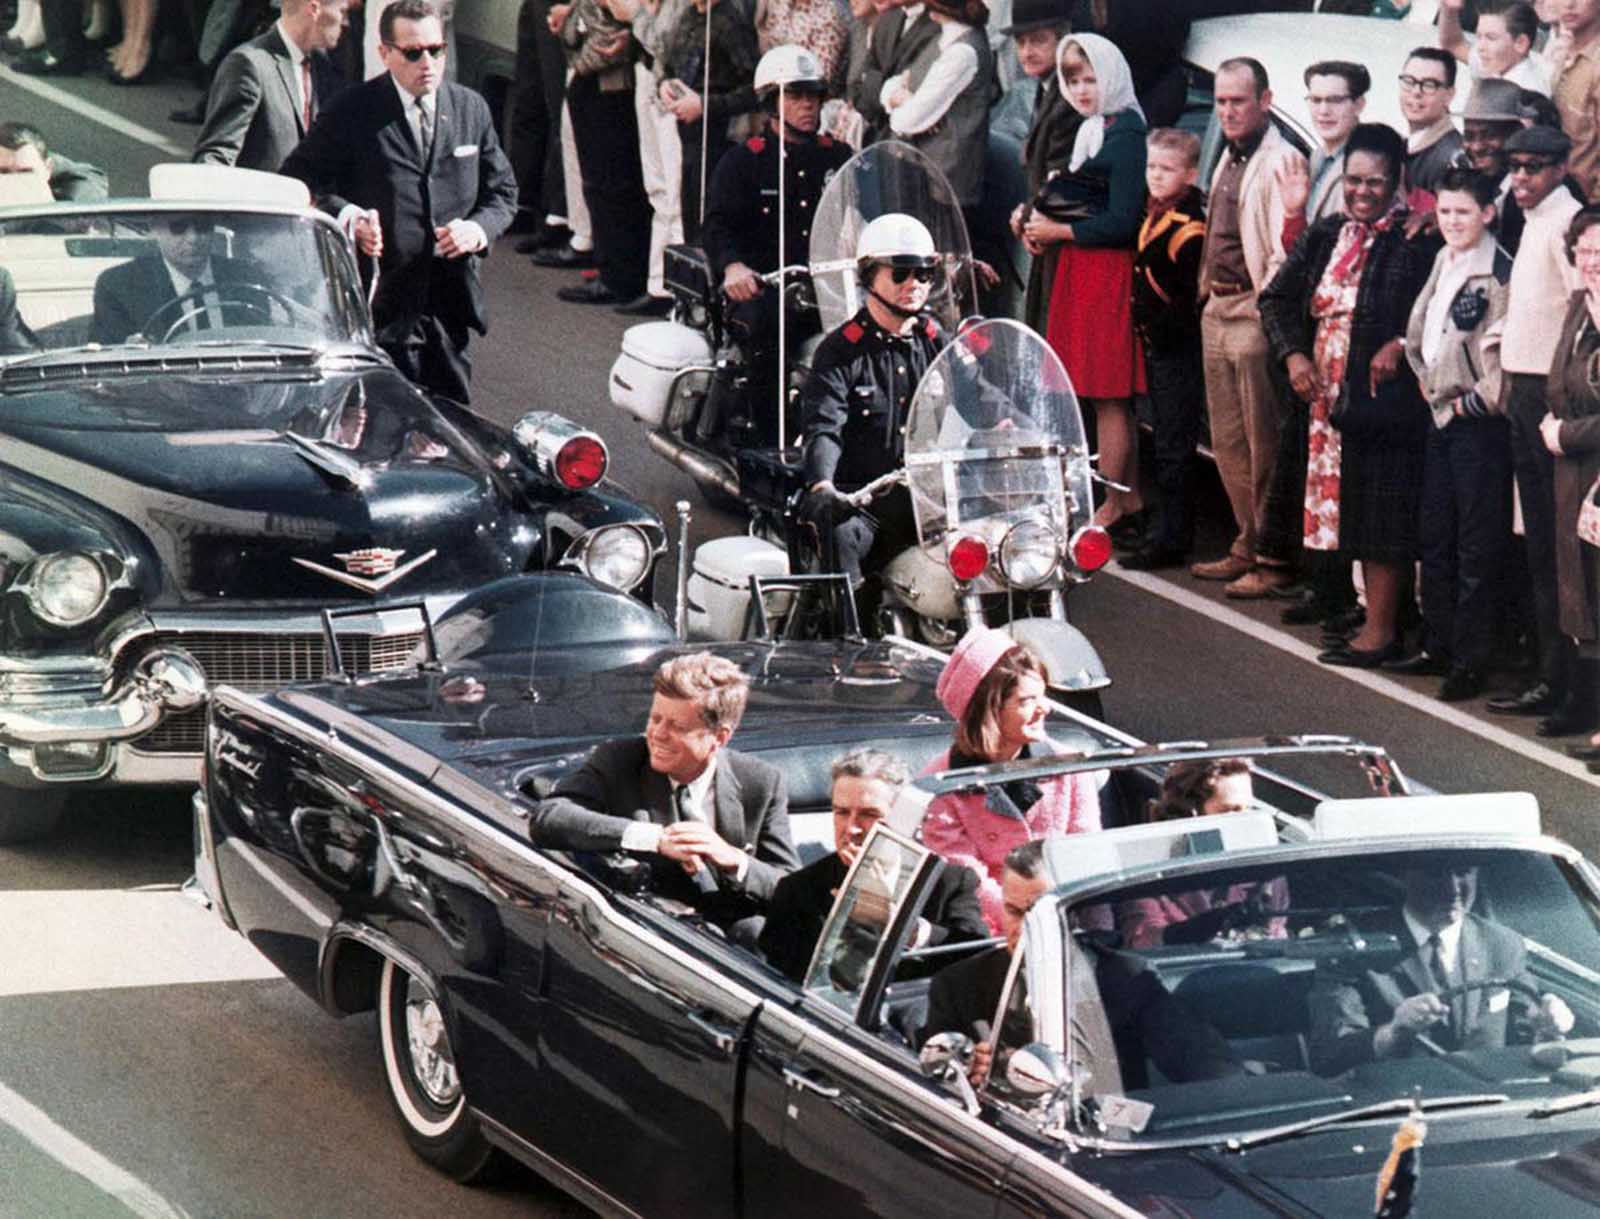 President John F. Kennedy's motorcade in Dallas, November 22, 1963.